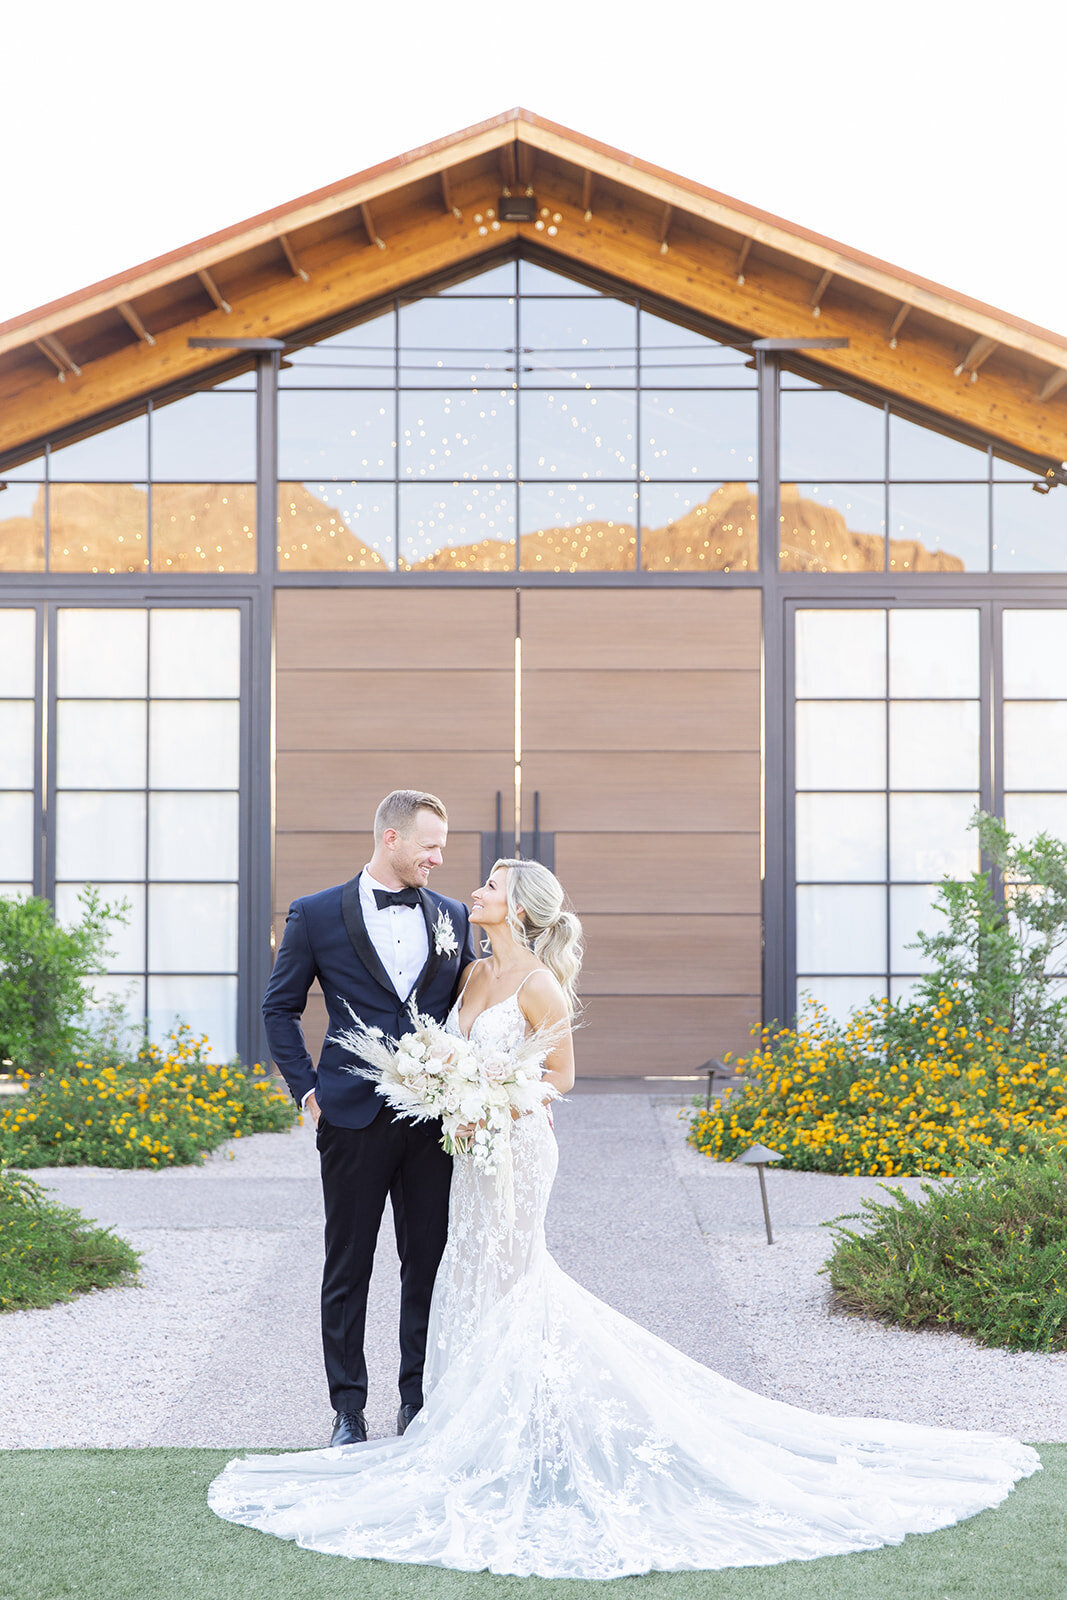 Karlie Colleen Photography - Ashley & Grant Wedding - The Paseo - Phoenix Arizona-714